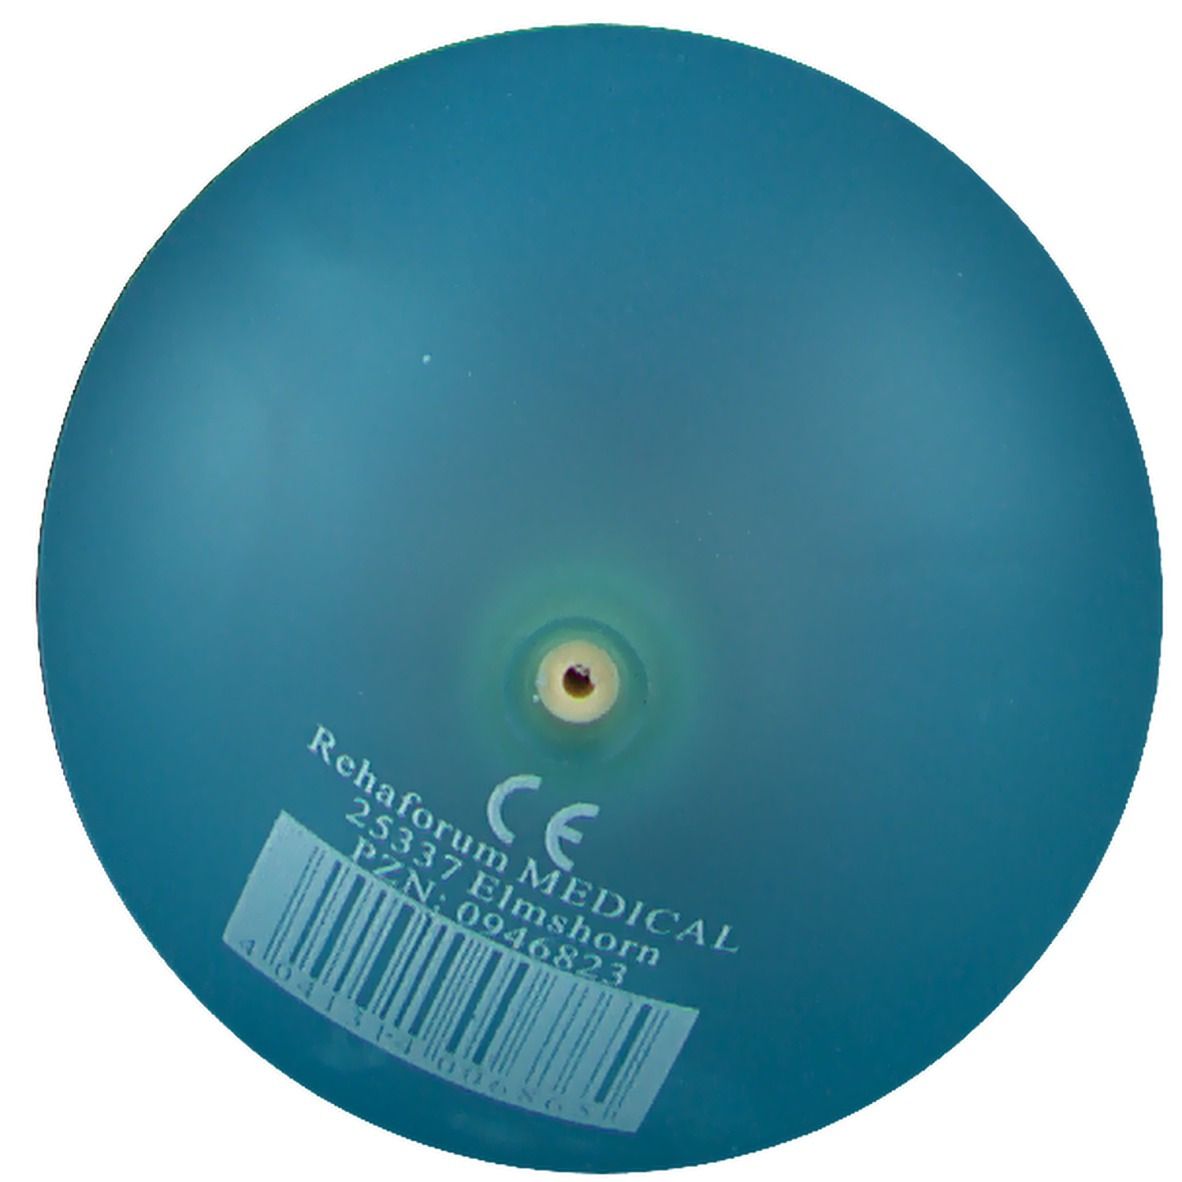 Rehaforum® Anti-Stress Ball (Farbe nicht wählbar)